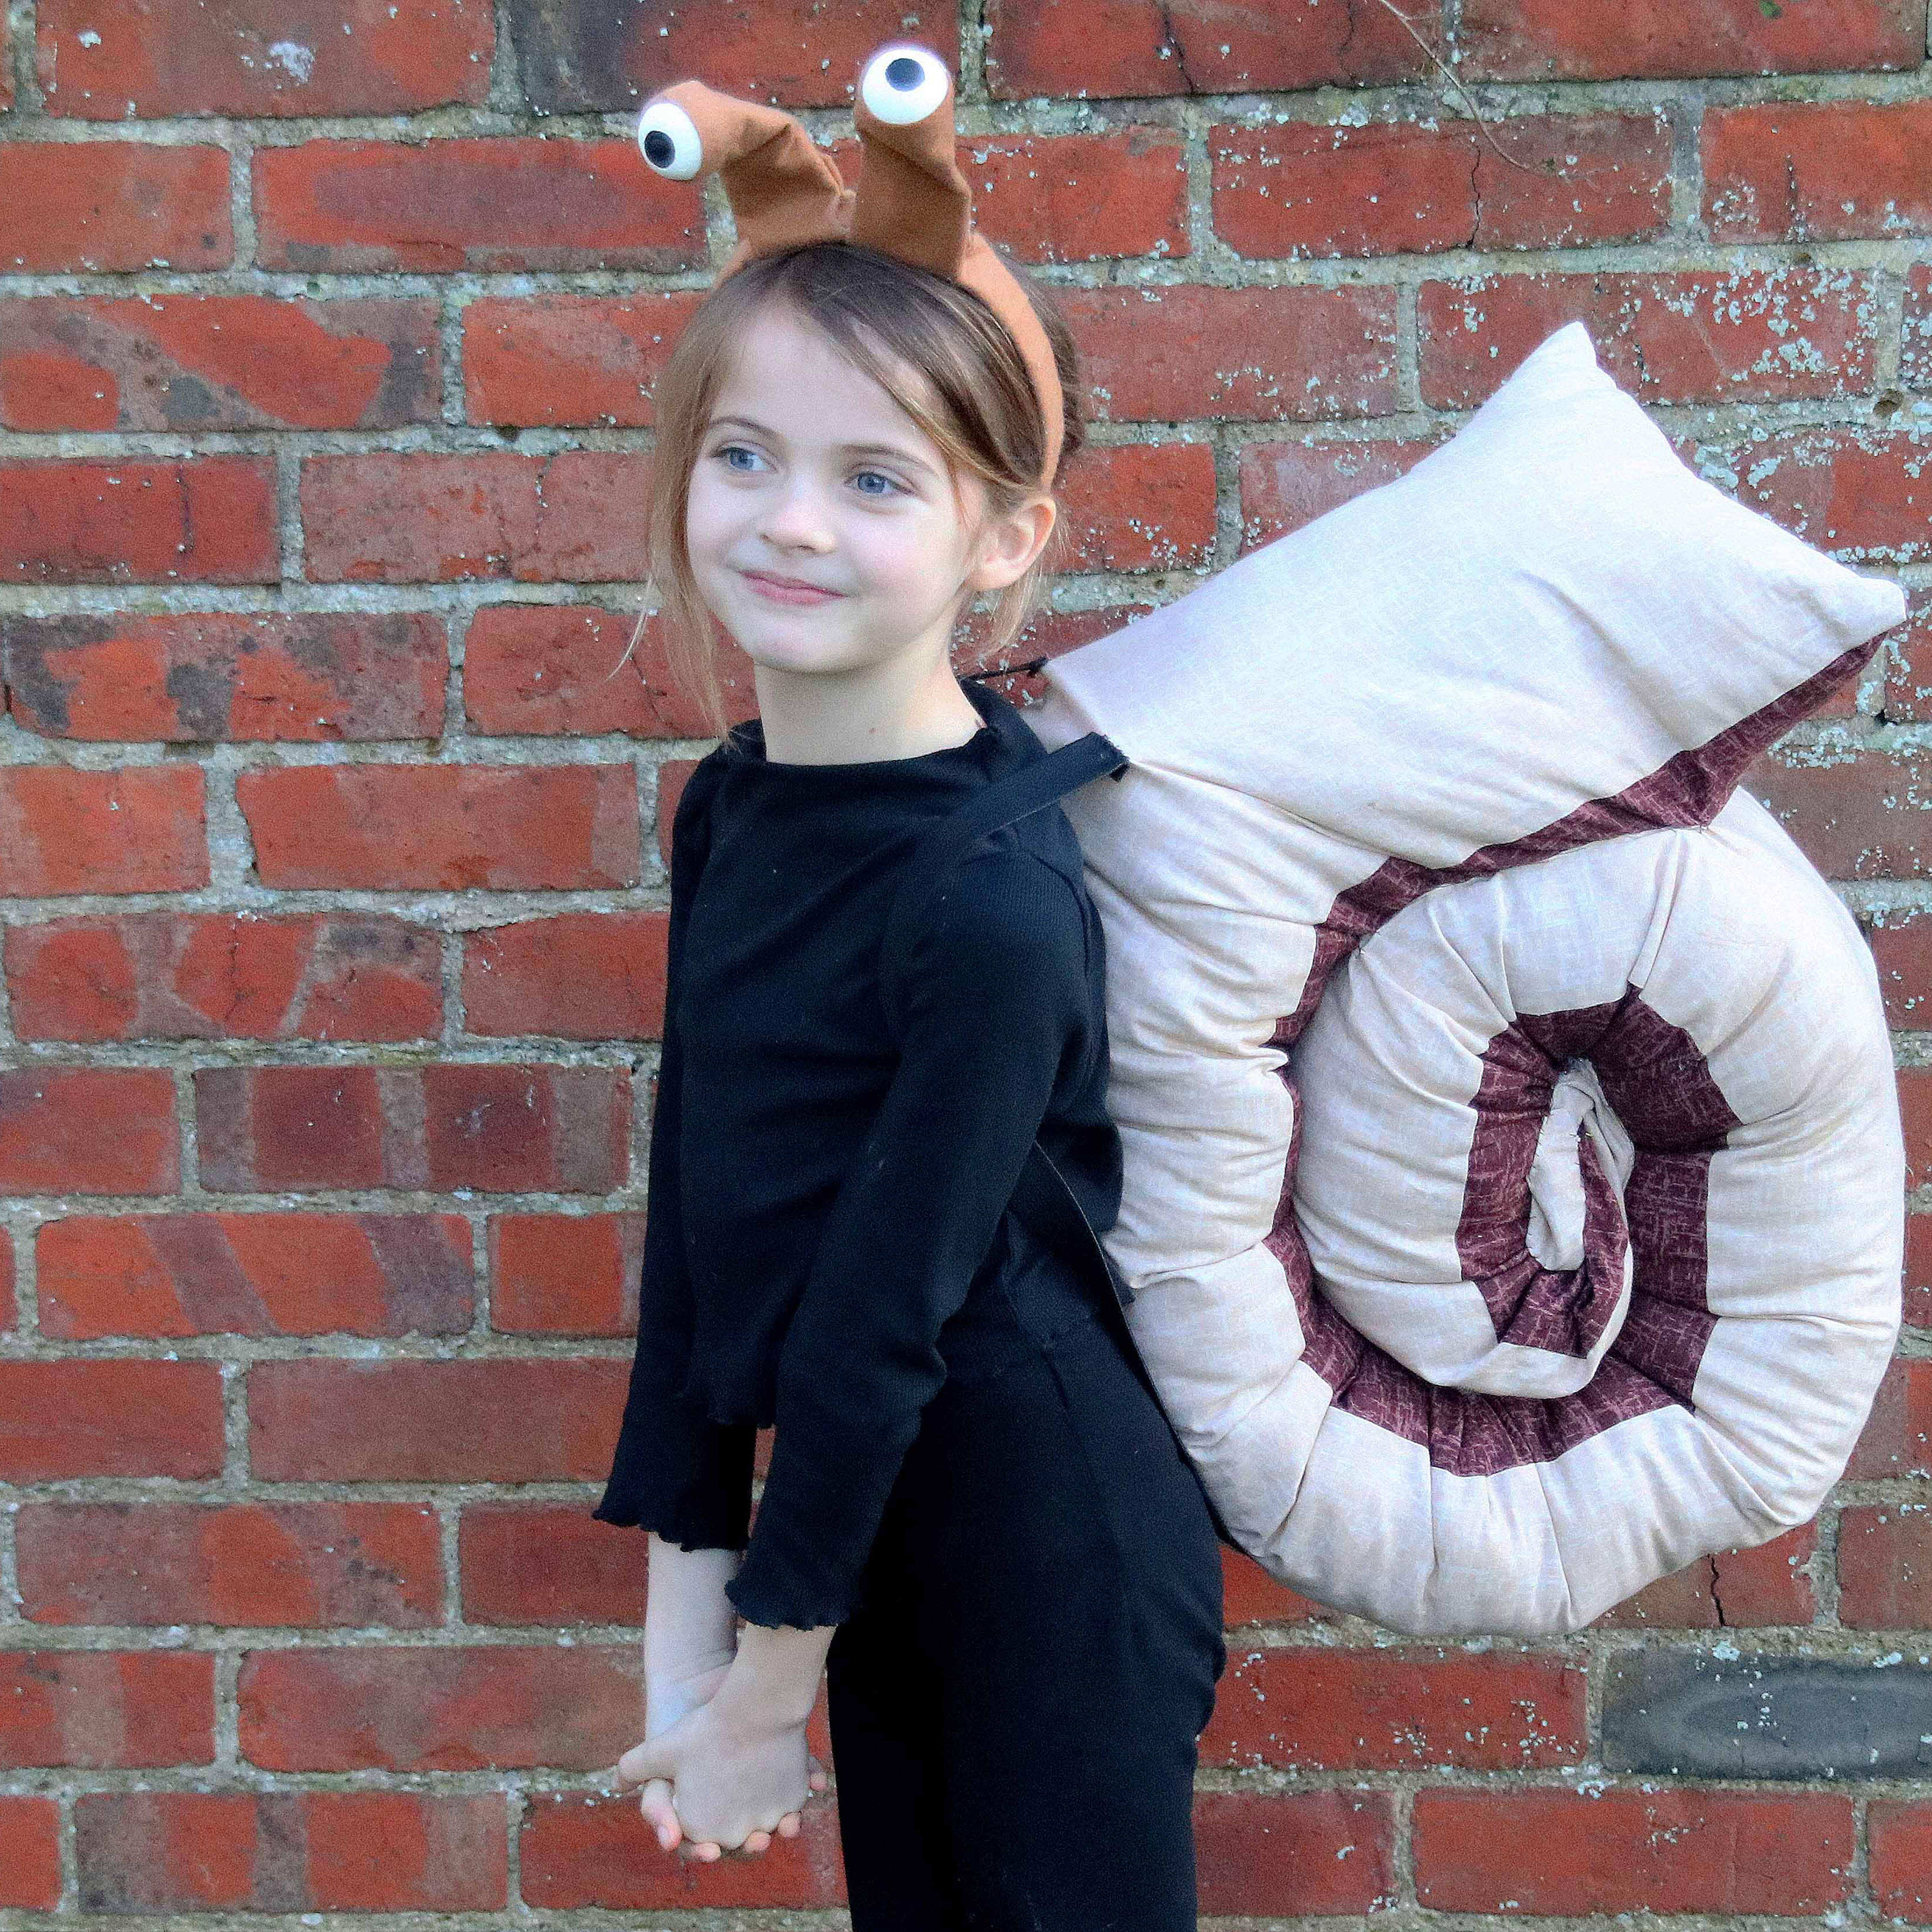 How Make a Snail Costume | Hobbycraft